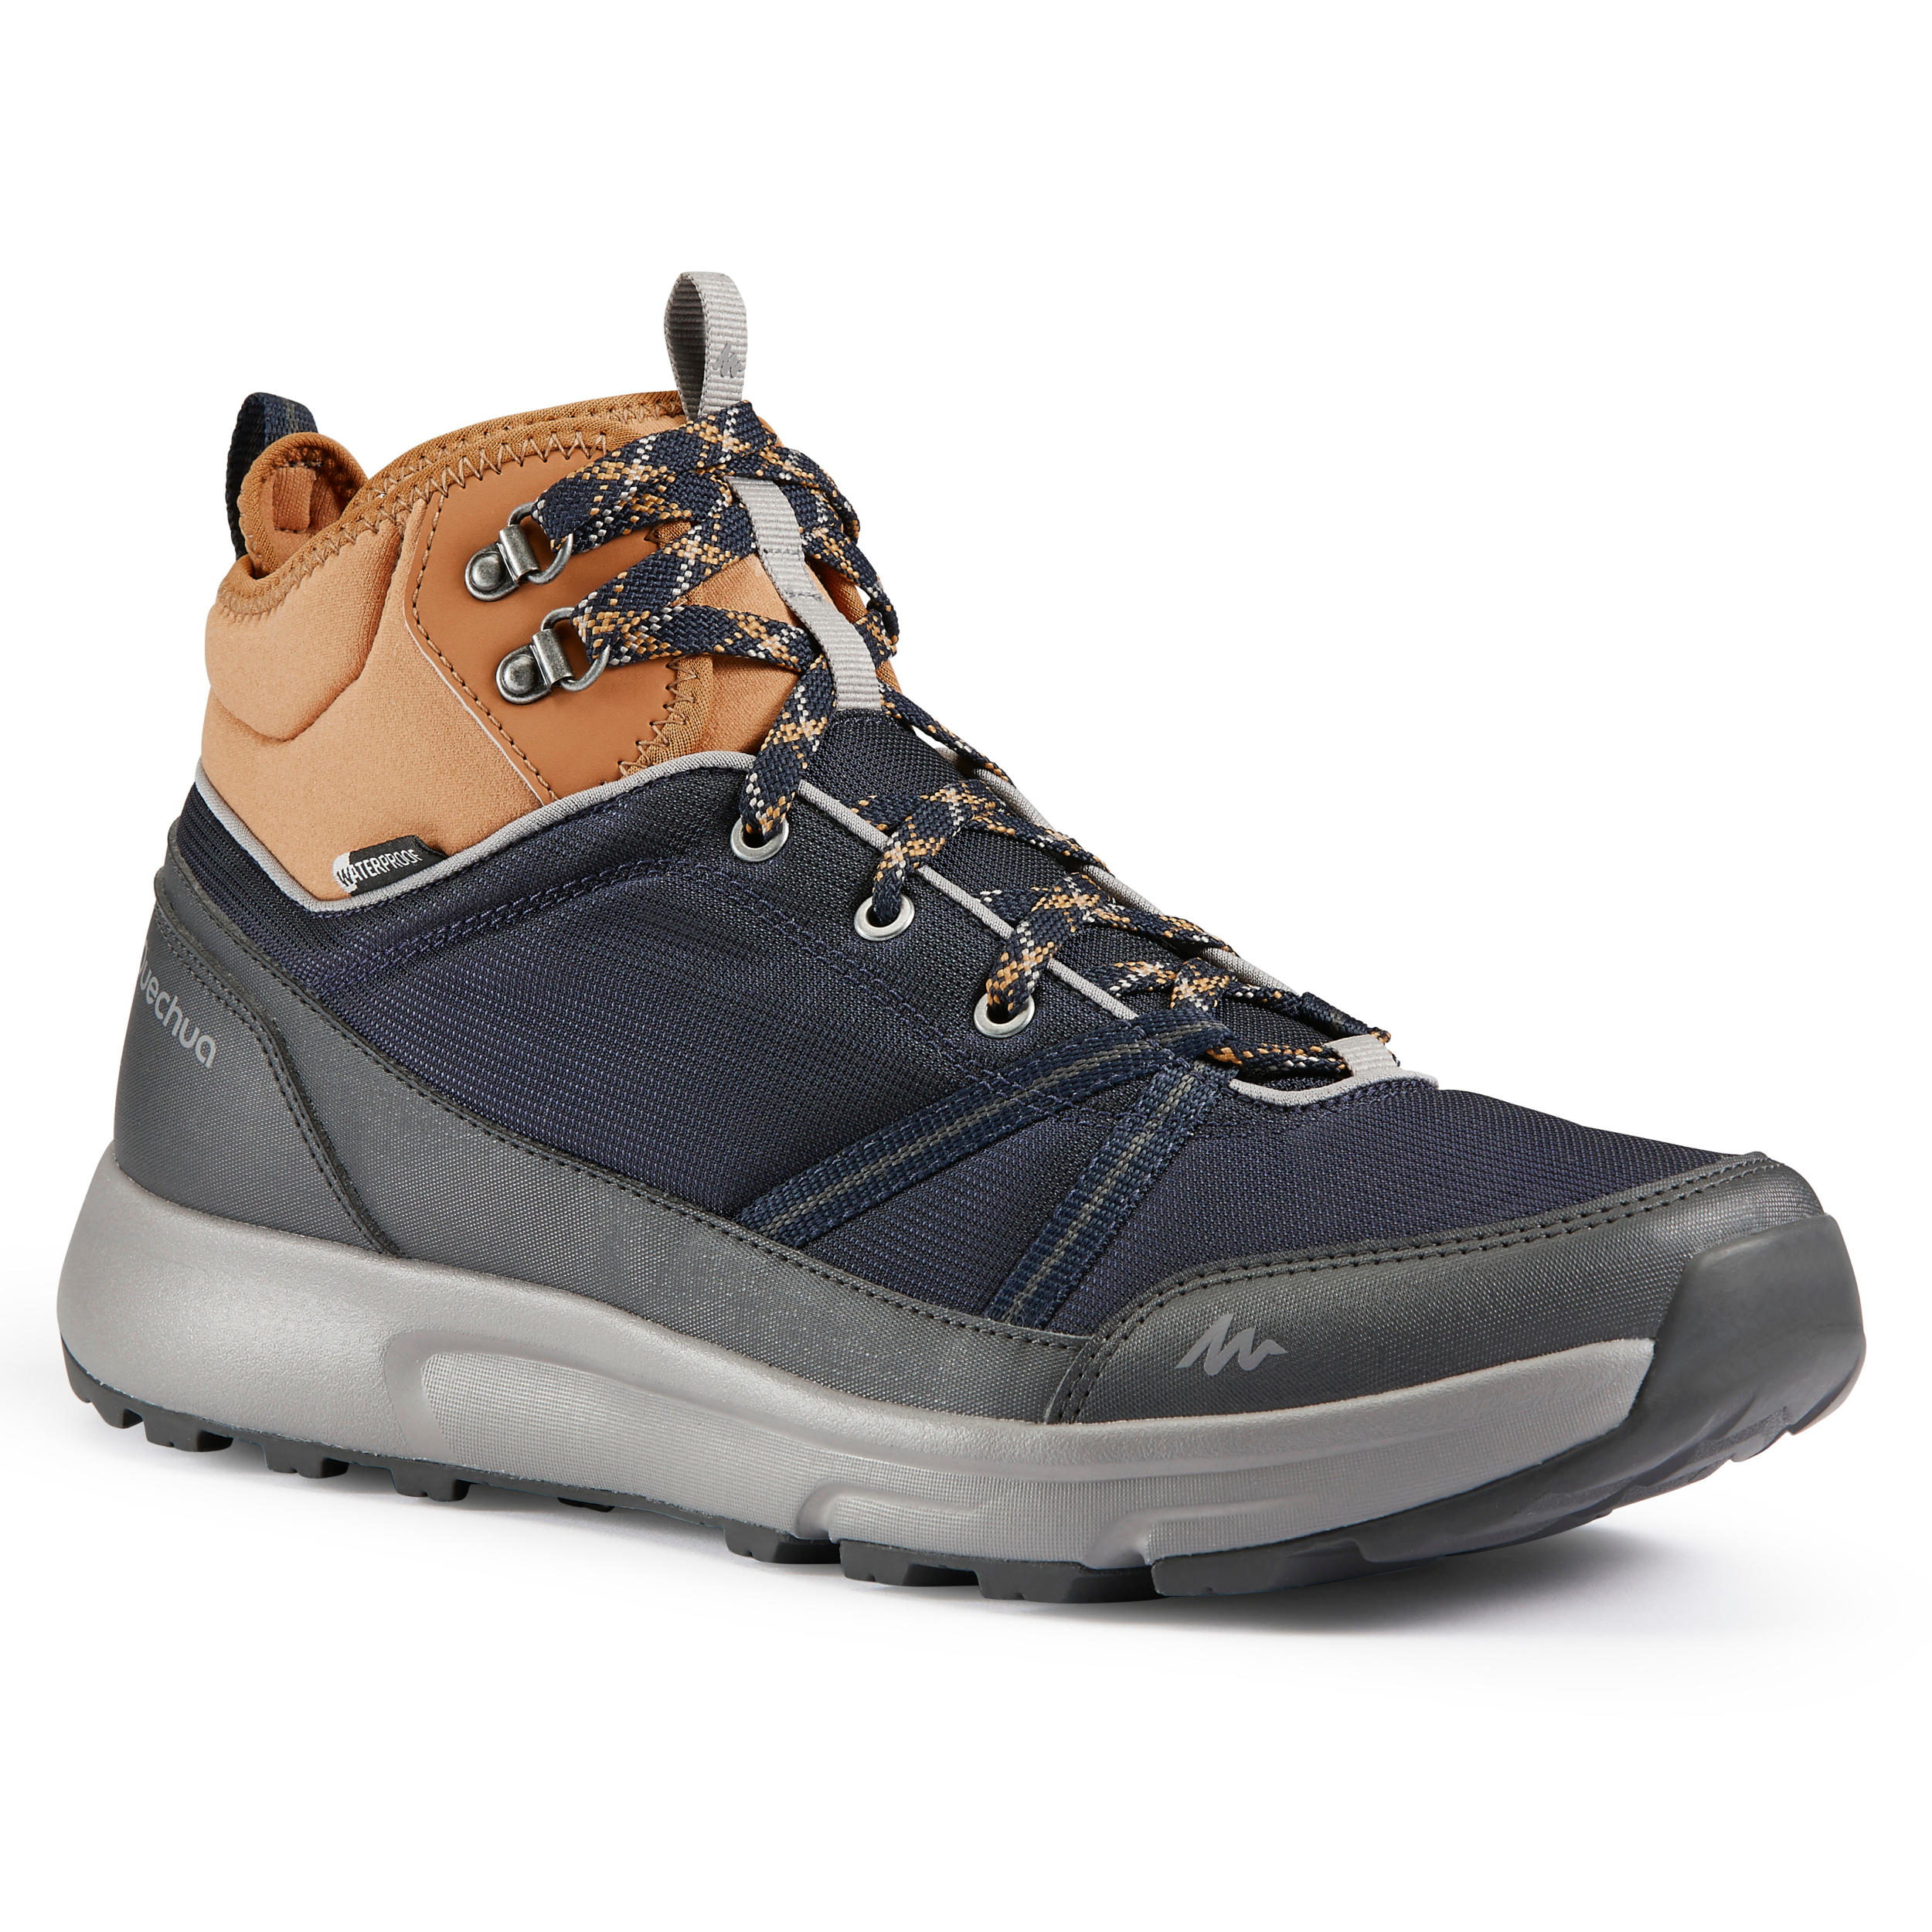 Men's waterproof off-road hiking shoes 